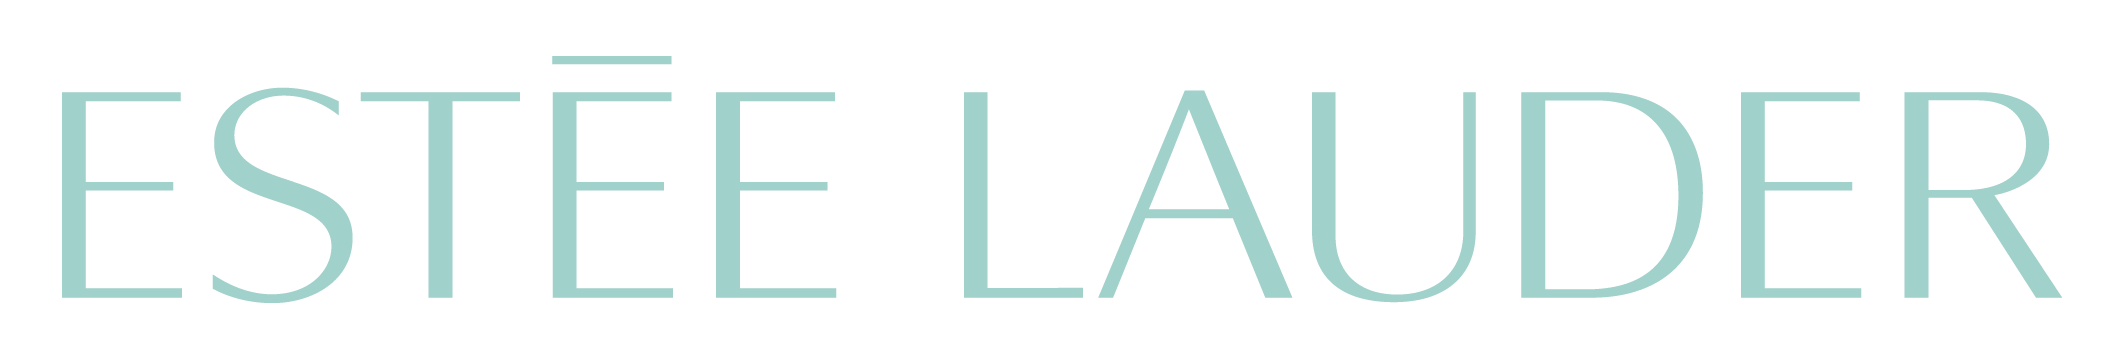 Estee Lauder Logo Transparent Background PNG